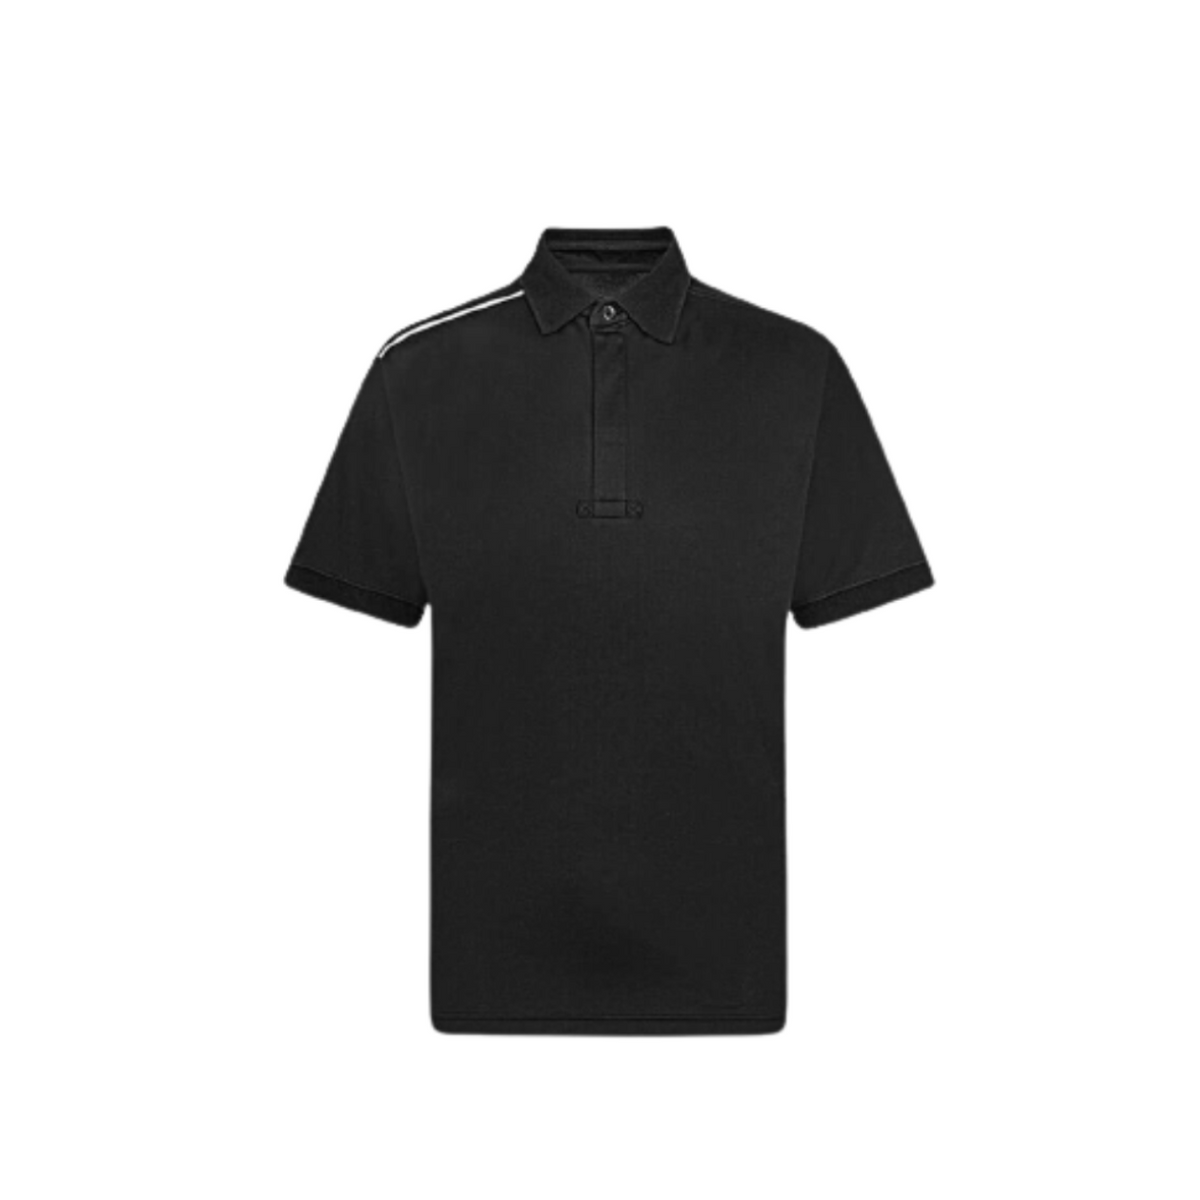 Portwest KX3 Polo Shirt Breathable Ribb Collar Black Short Sleeve Shirt T820-Collins Clothing Co